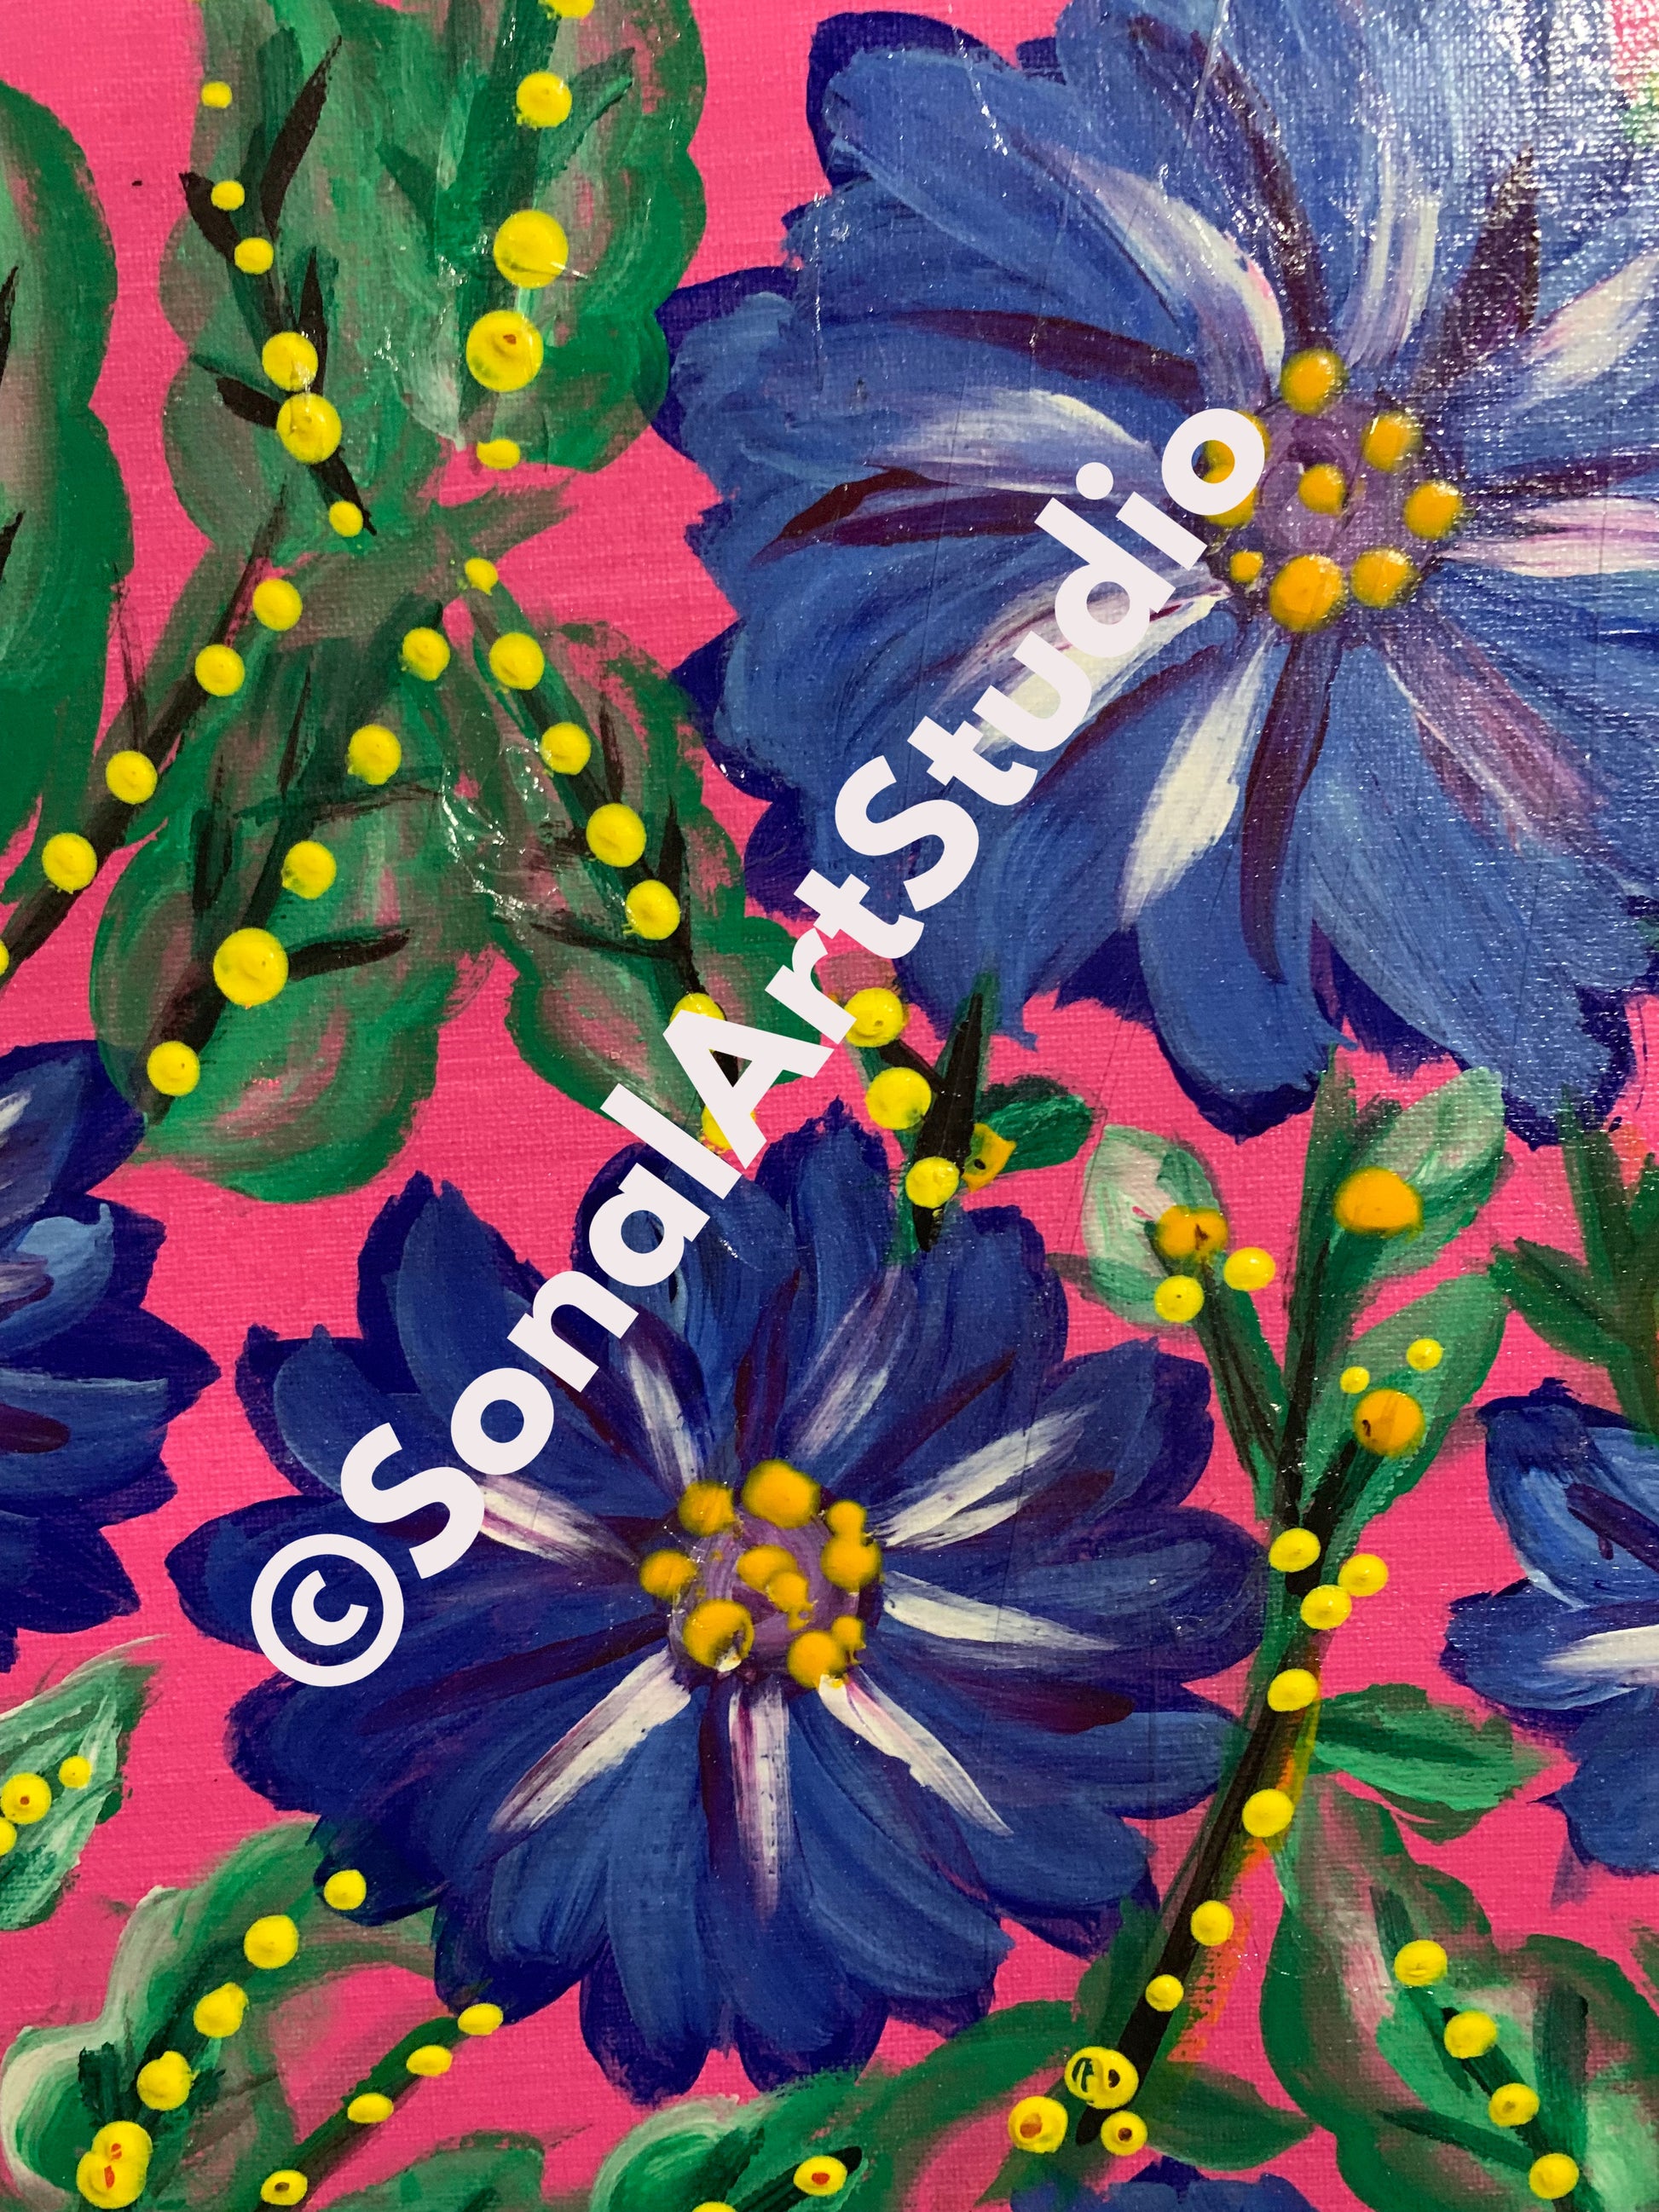 Blue Flowers Painting - SonalArtStudio